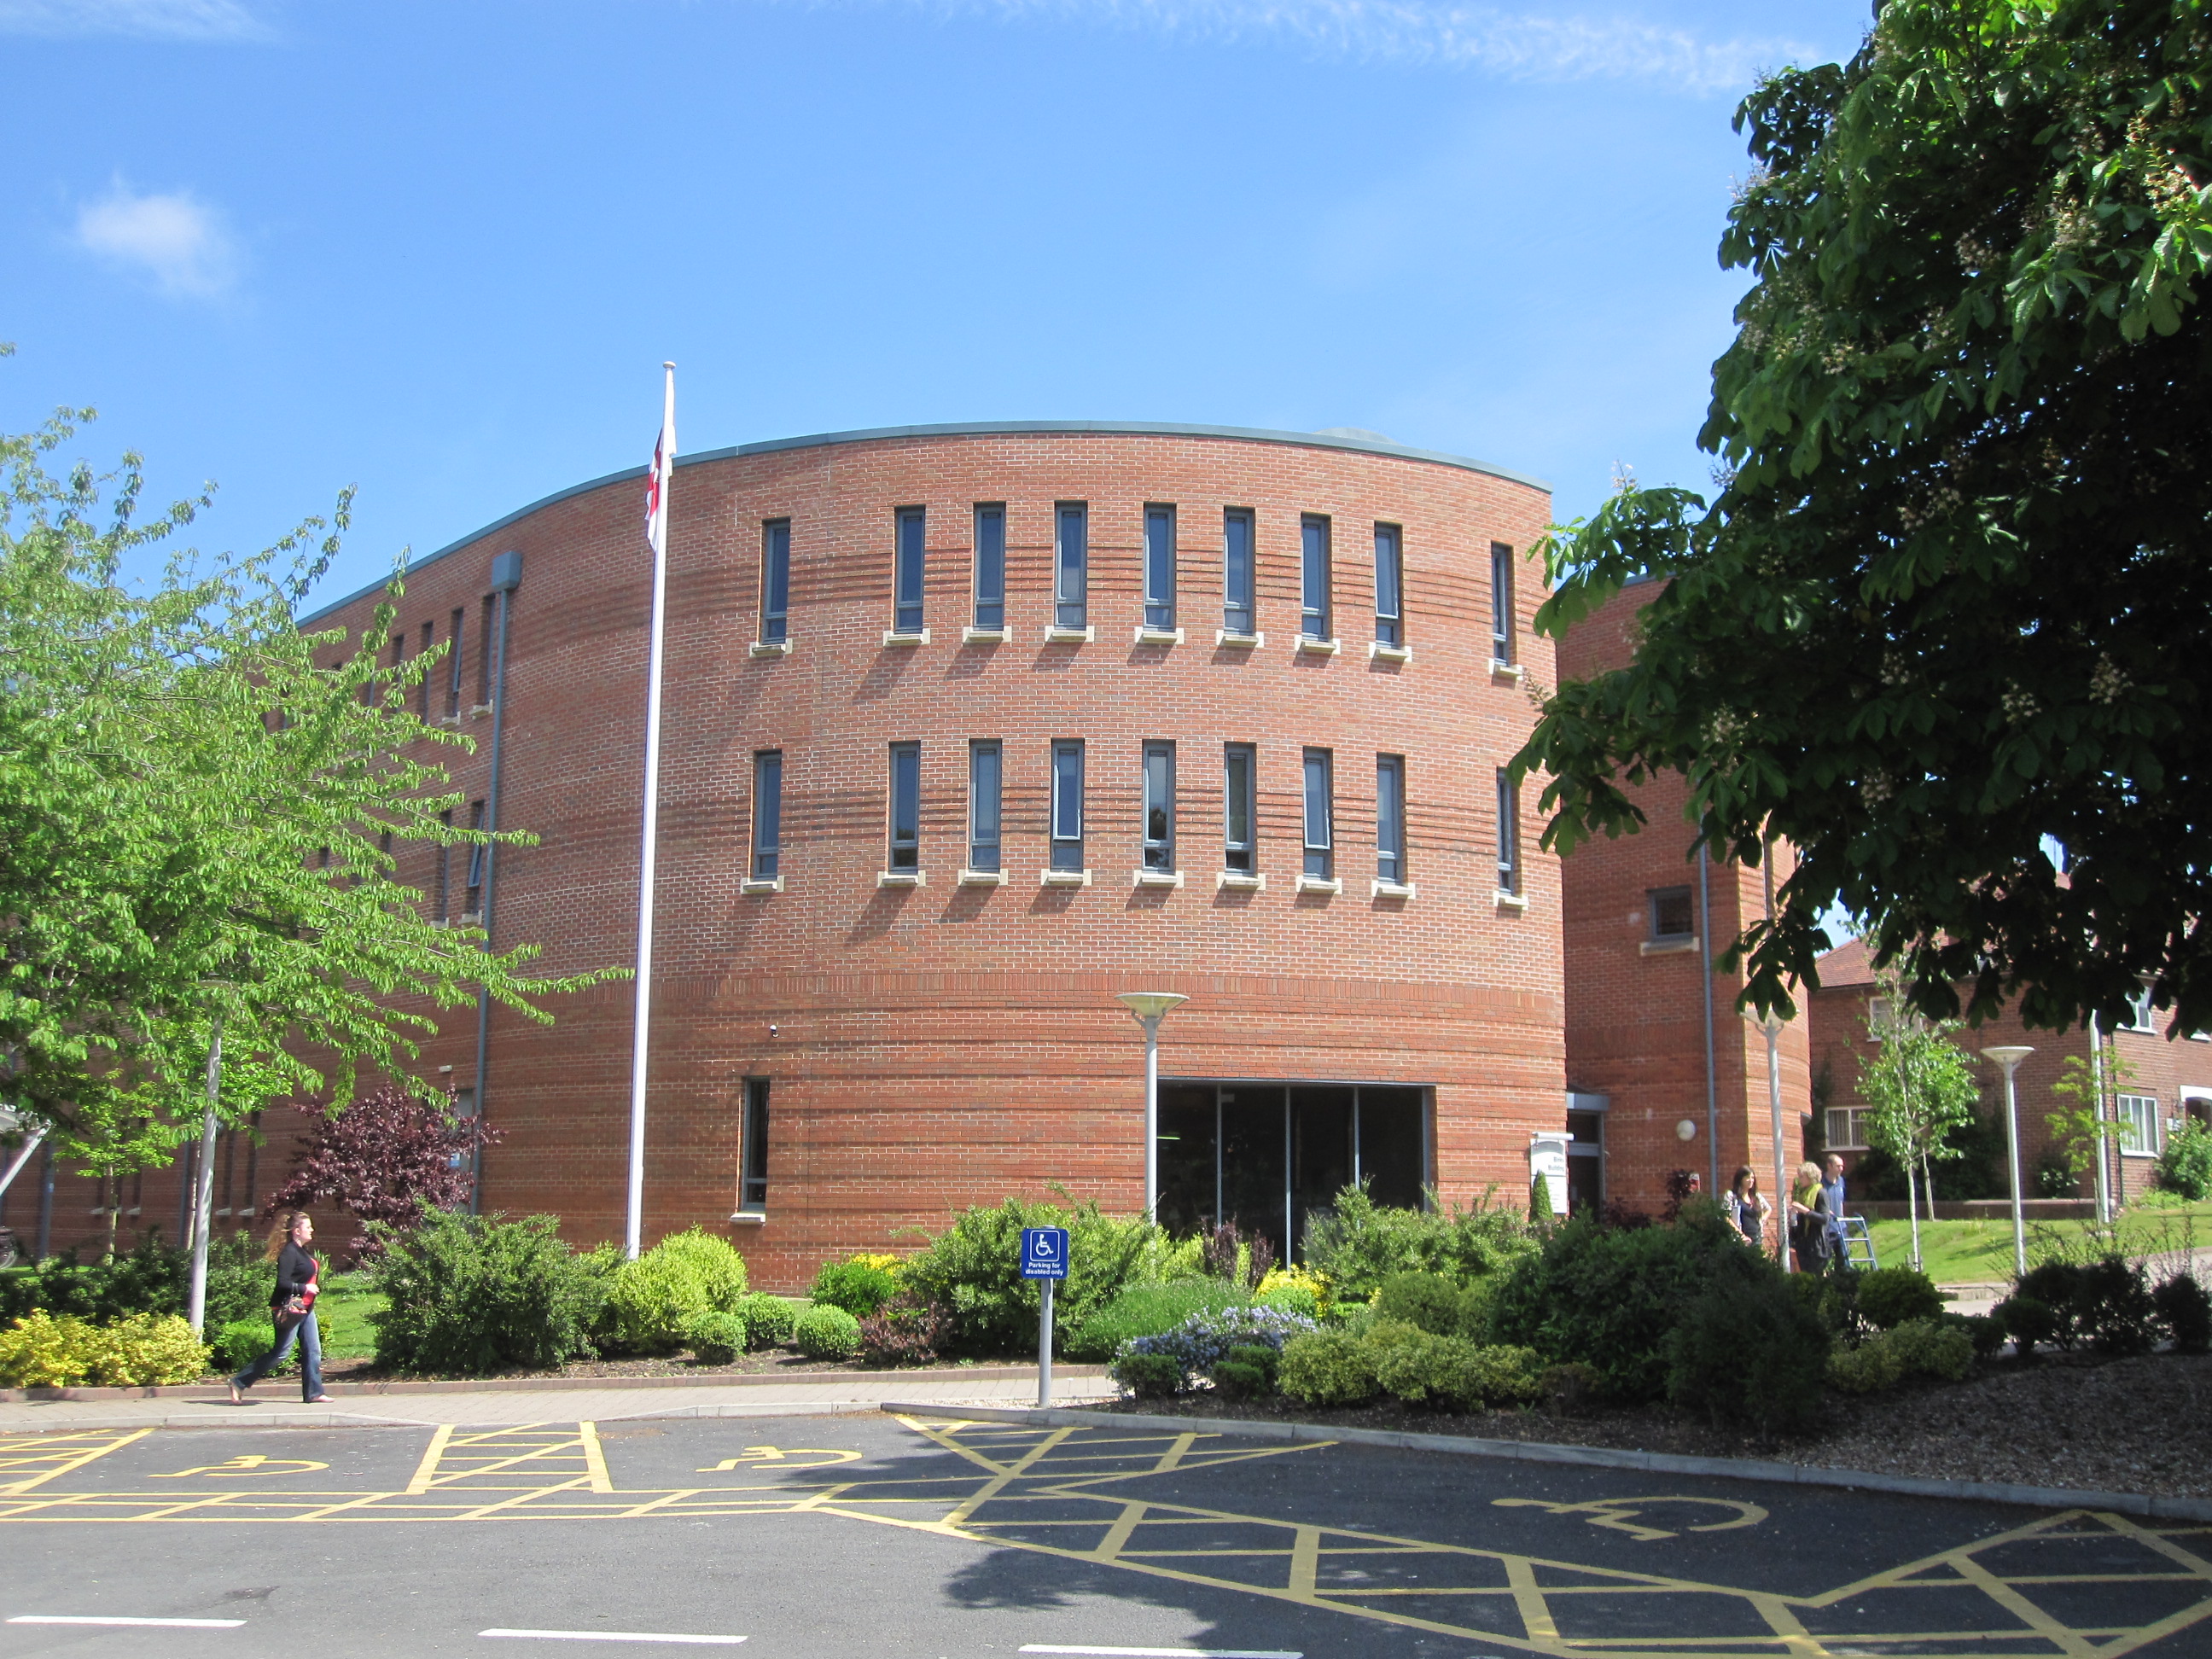 University of Chester – Parkgate